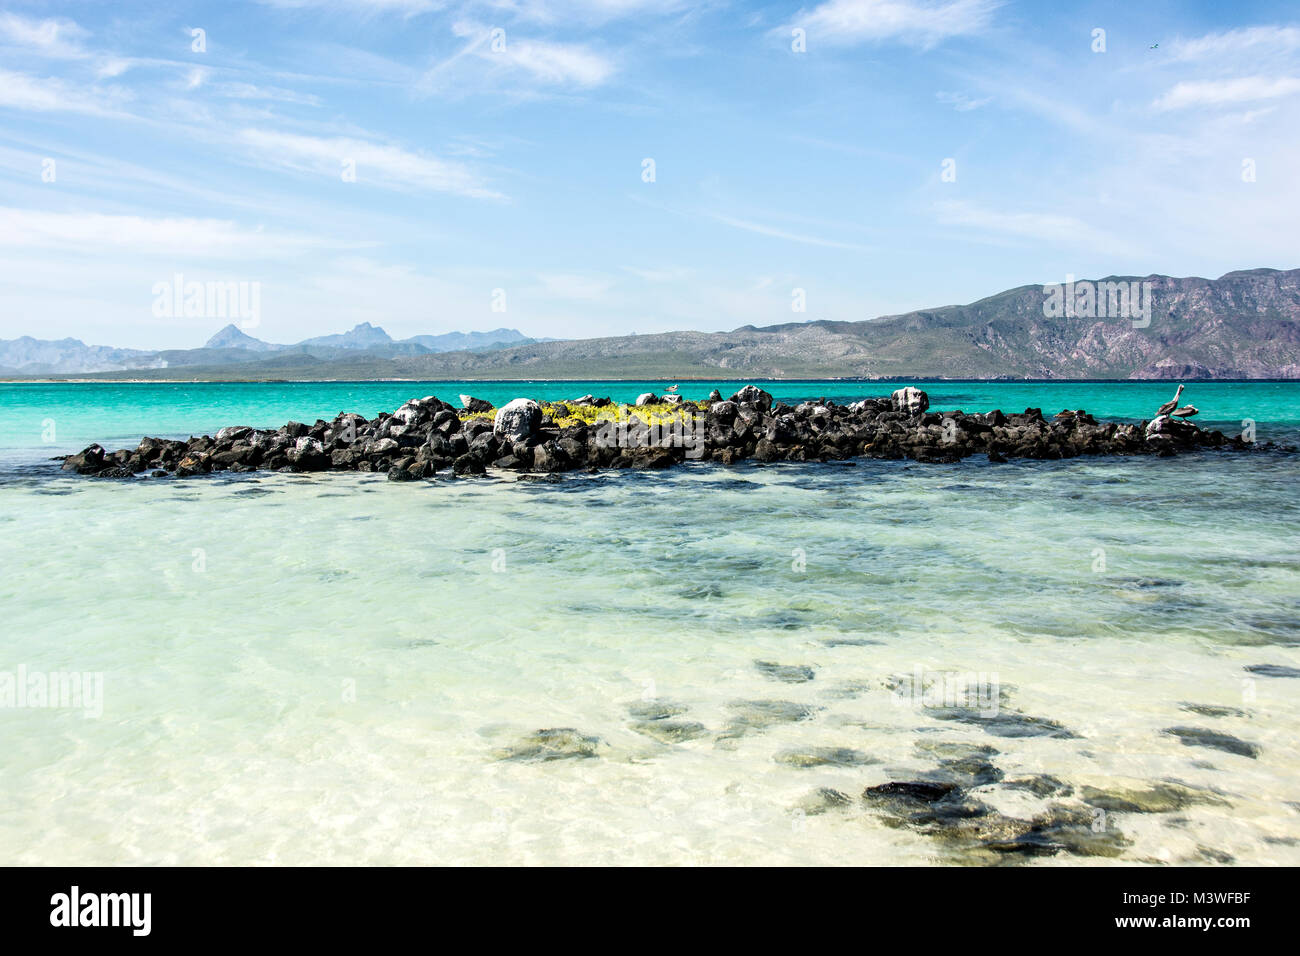 Isla de Coronado beach, part of the Loreto Bay National Park system, Baja Mexico Sur. Stock Photo